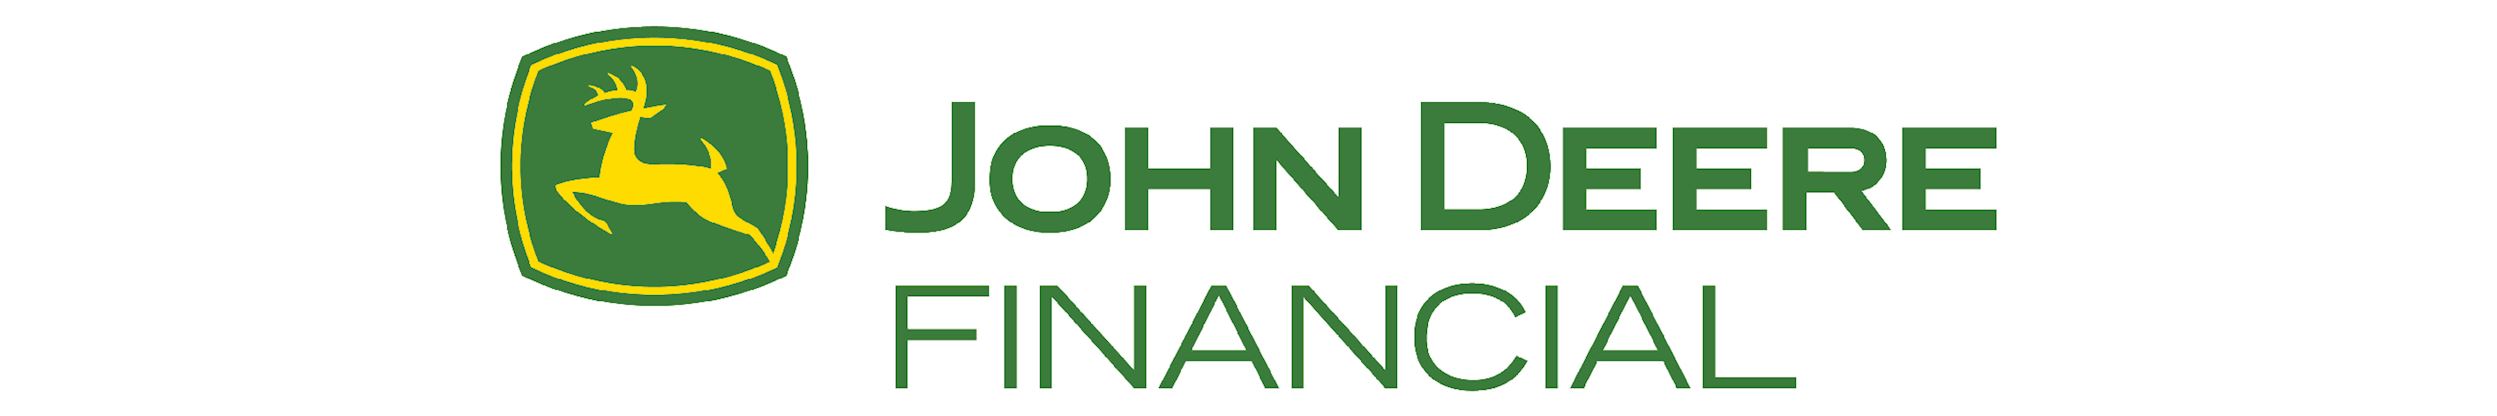 John Deere Financial logo